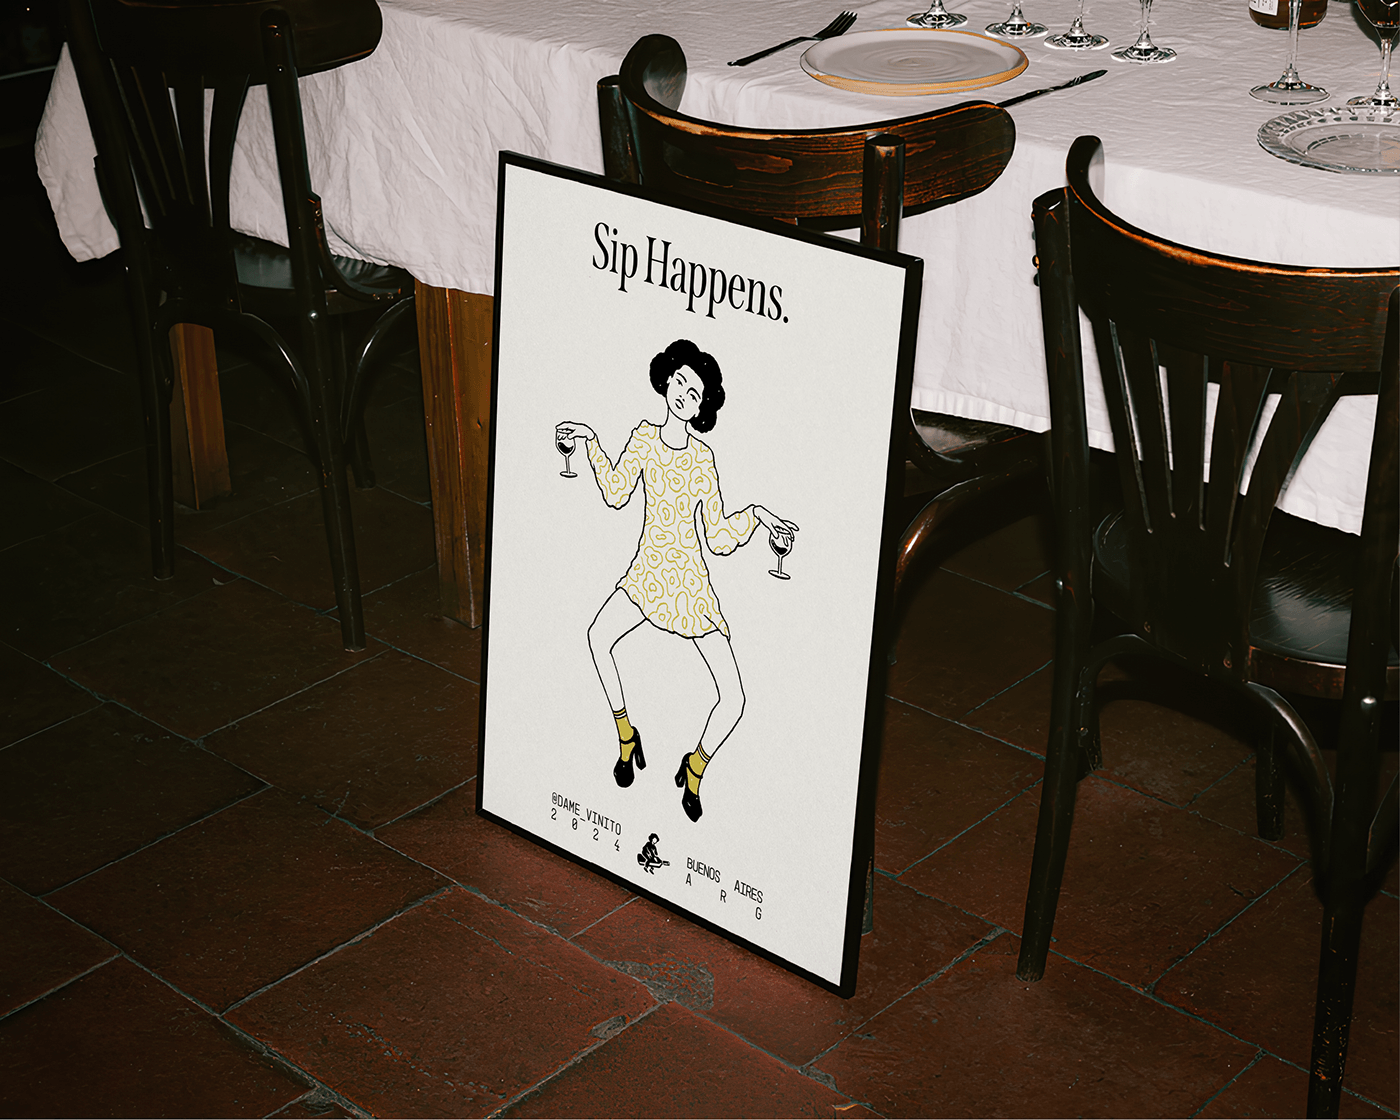 Framed poster at a restaurant.